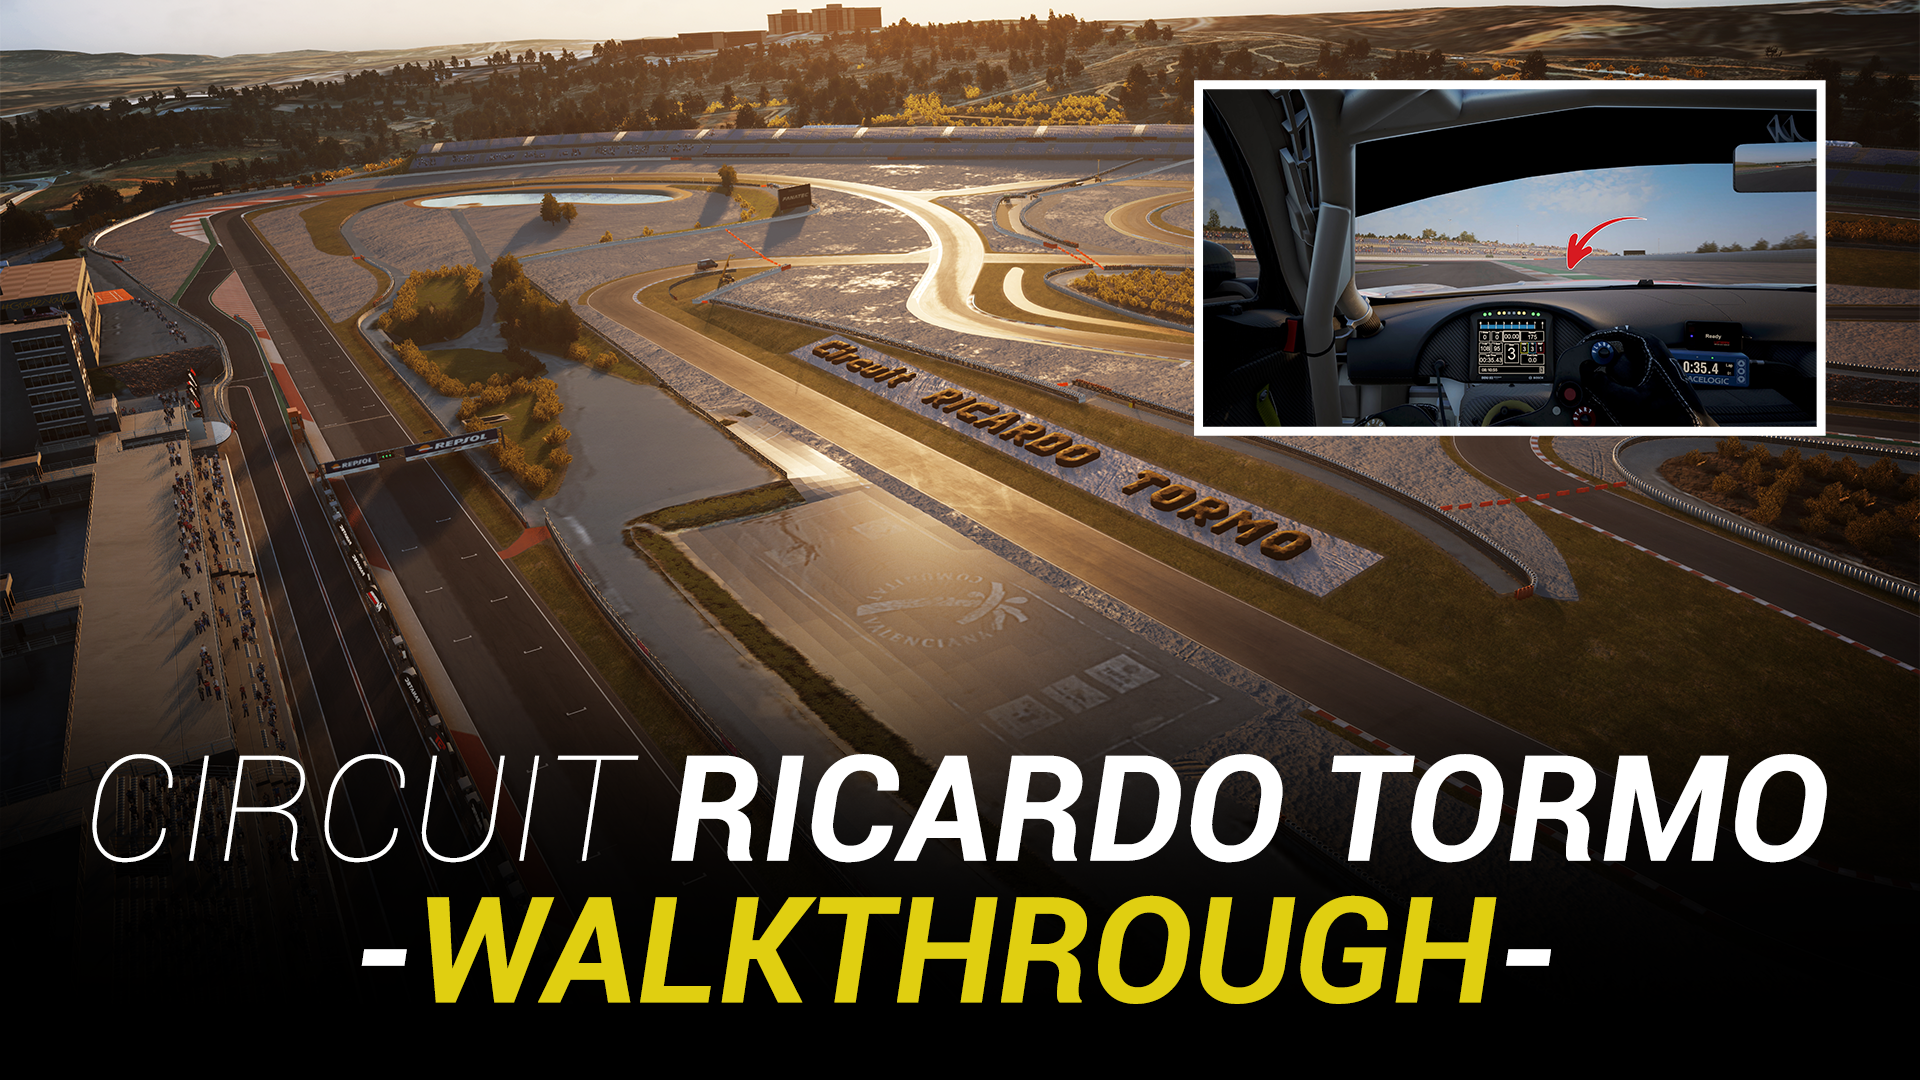 More information about "Assetto Corsa Competizione: Circuit Ricardo Tormo Track Walkthrough"